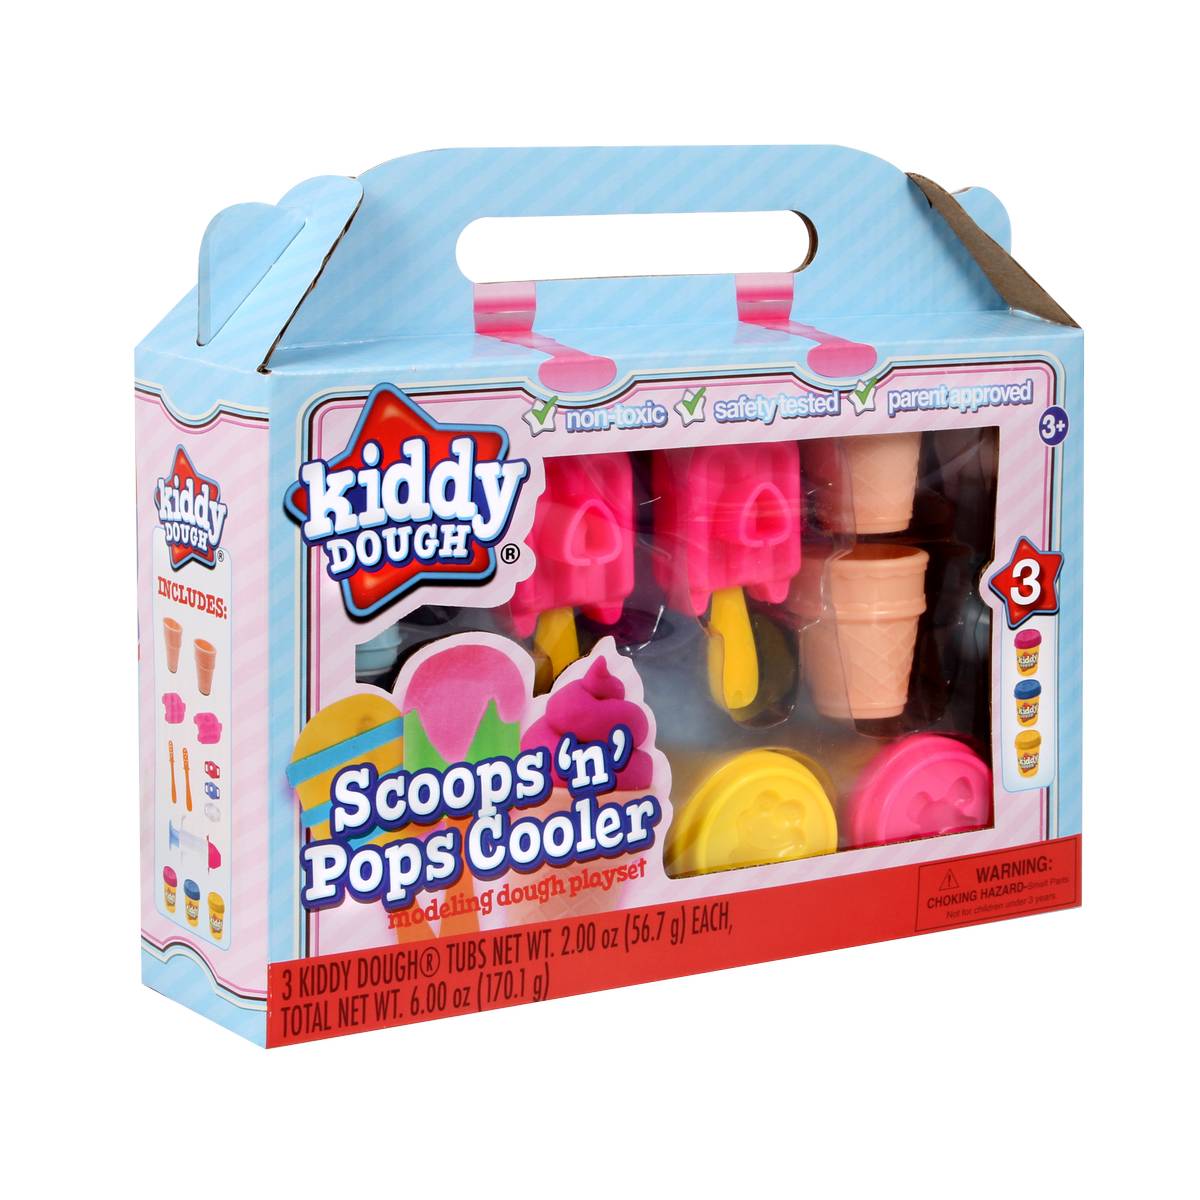 Kiddy Dough Bucket Modeling Play Set